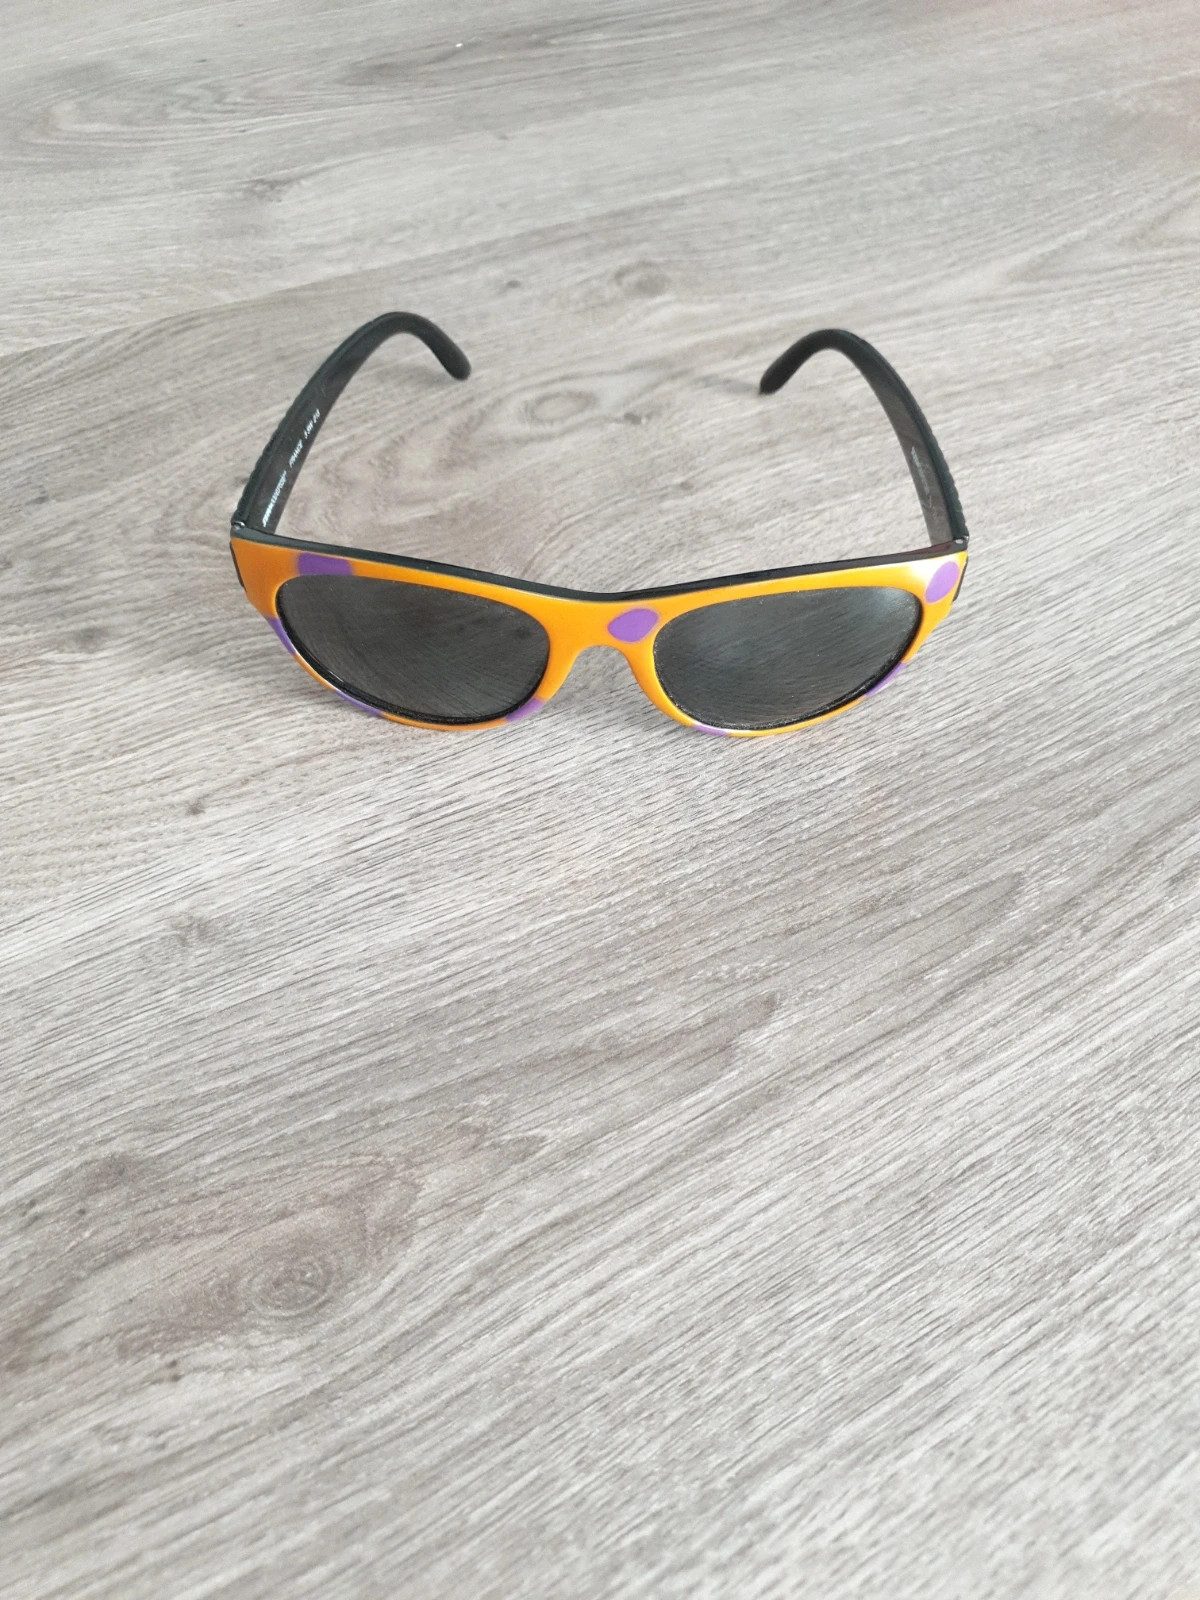 cerjo Sunglasses  Fashion and Protection